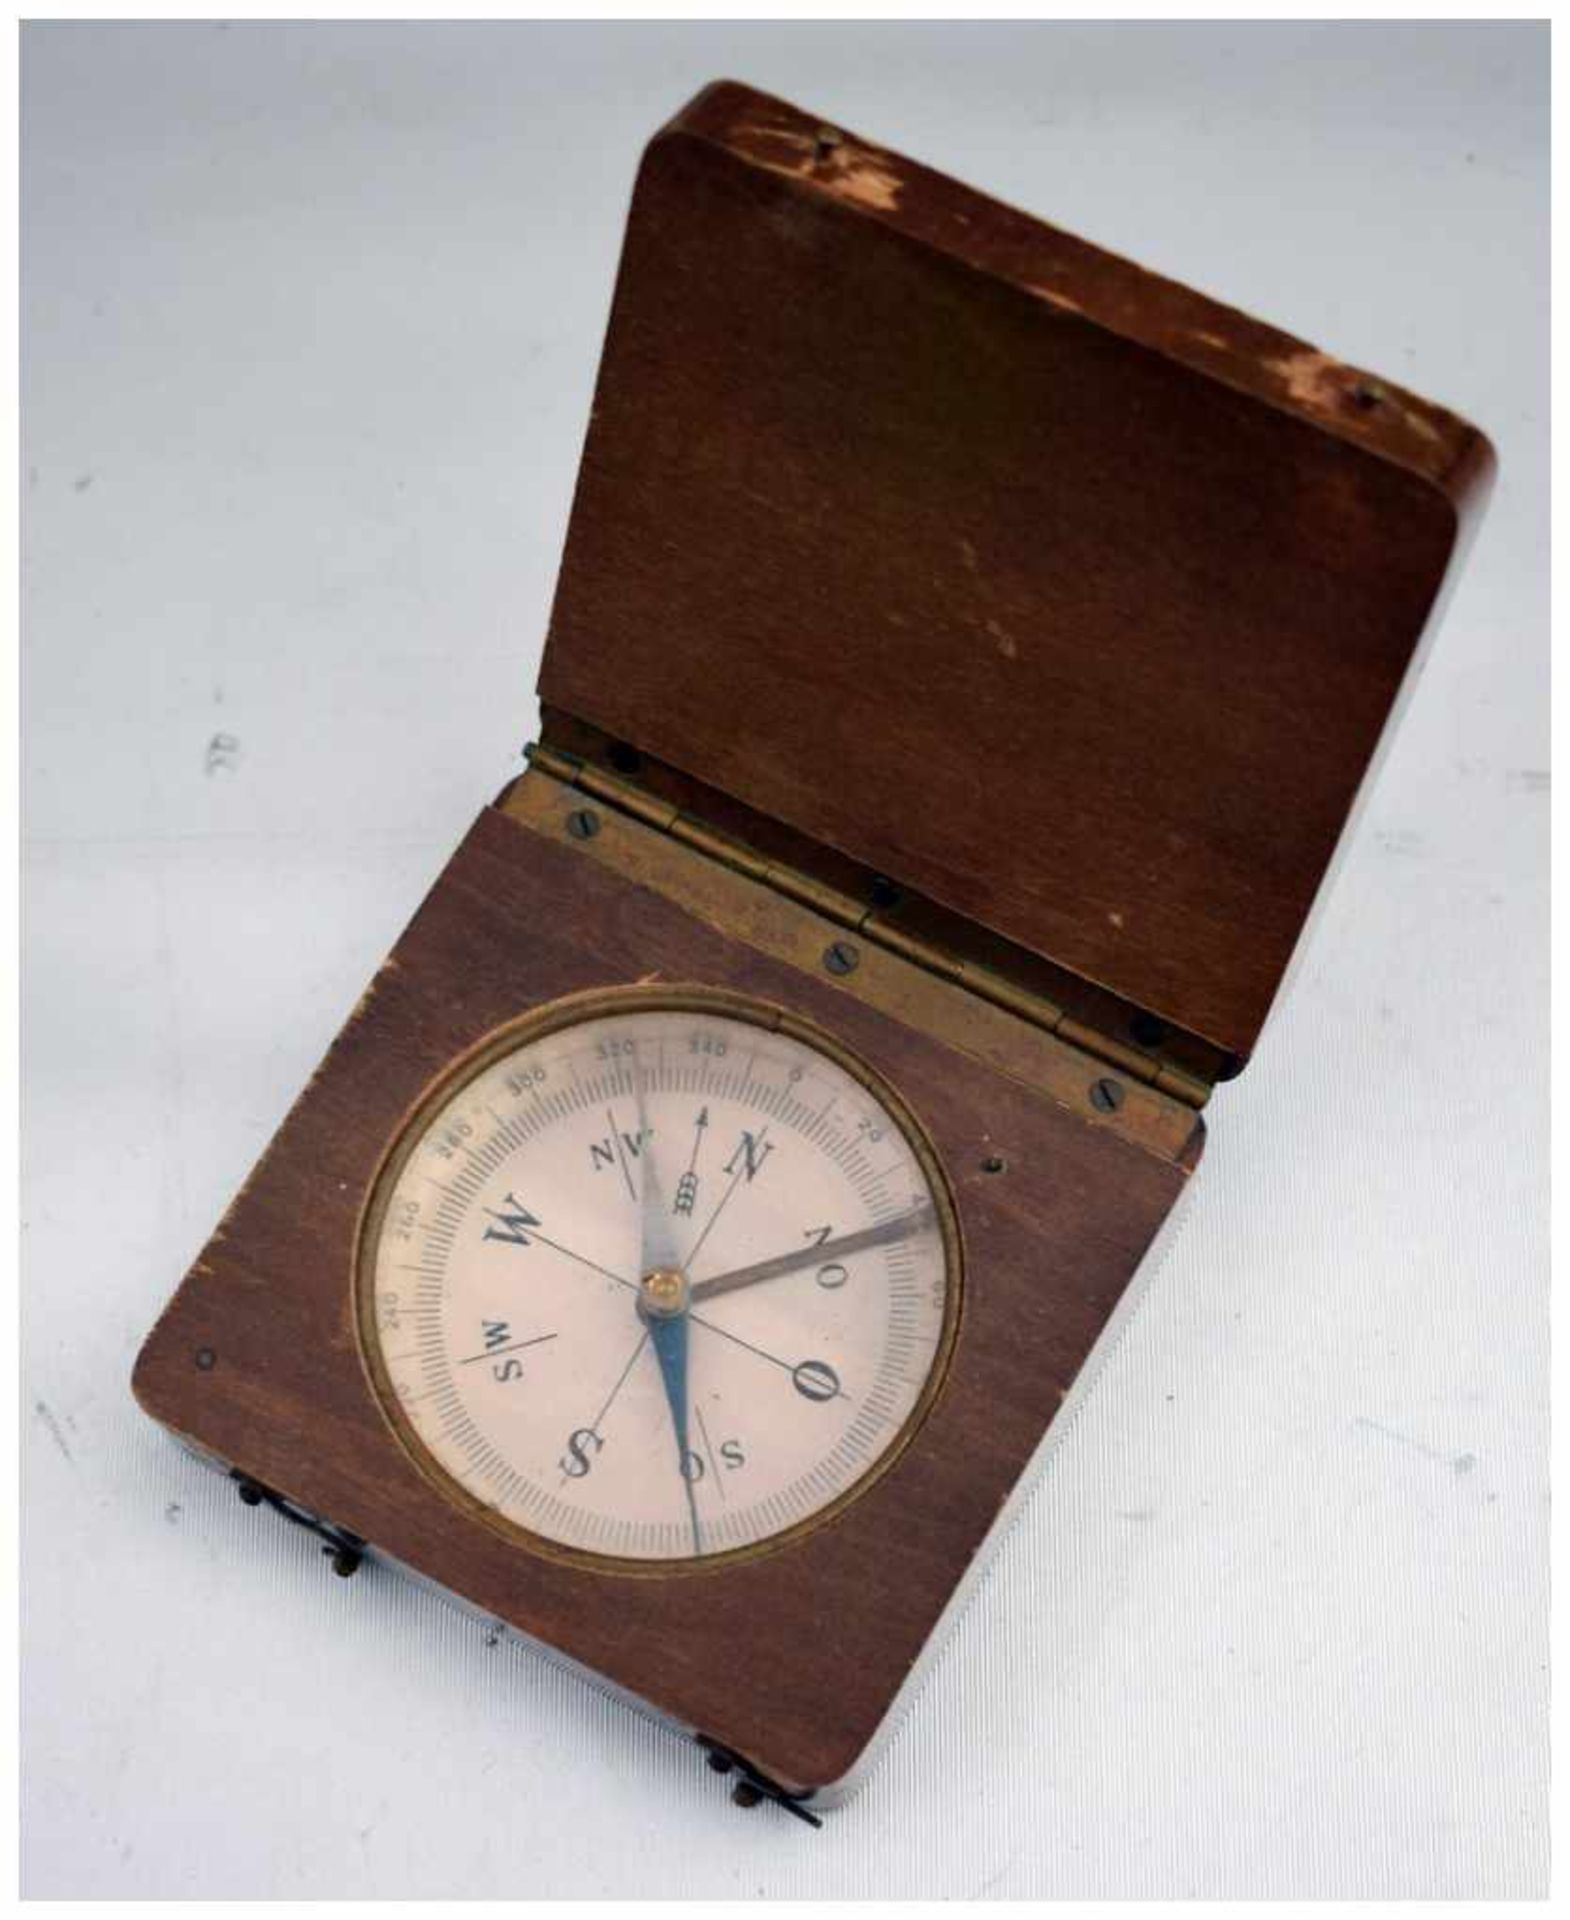 Kompass in Hartholzgehäuse, 8 X 8 cm